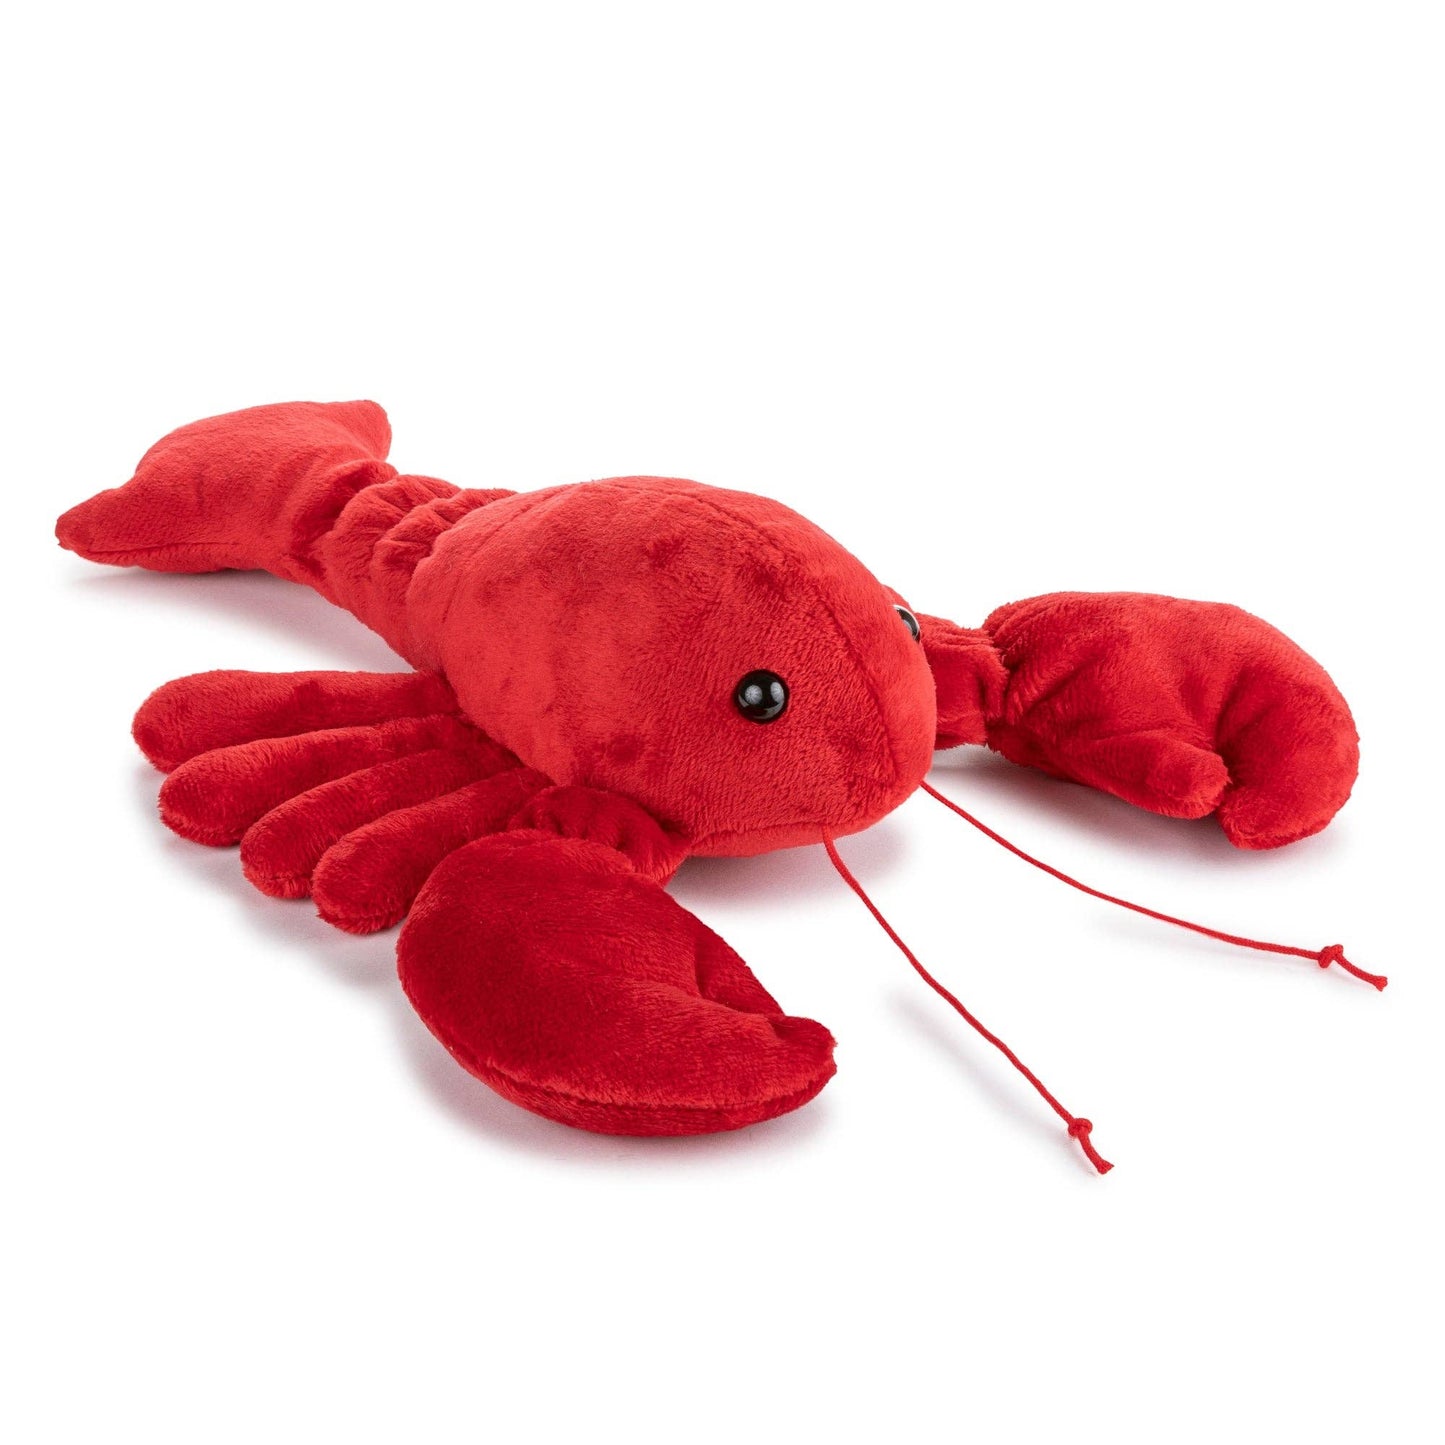 12" Stuffed Lobster